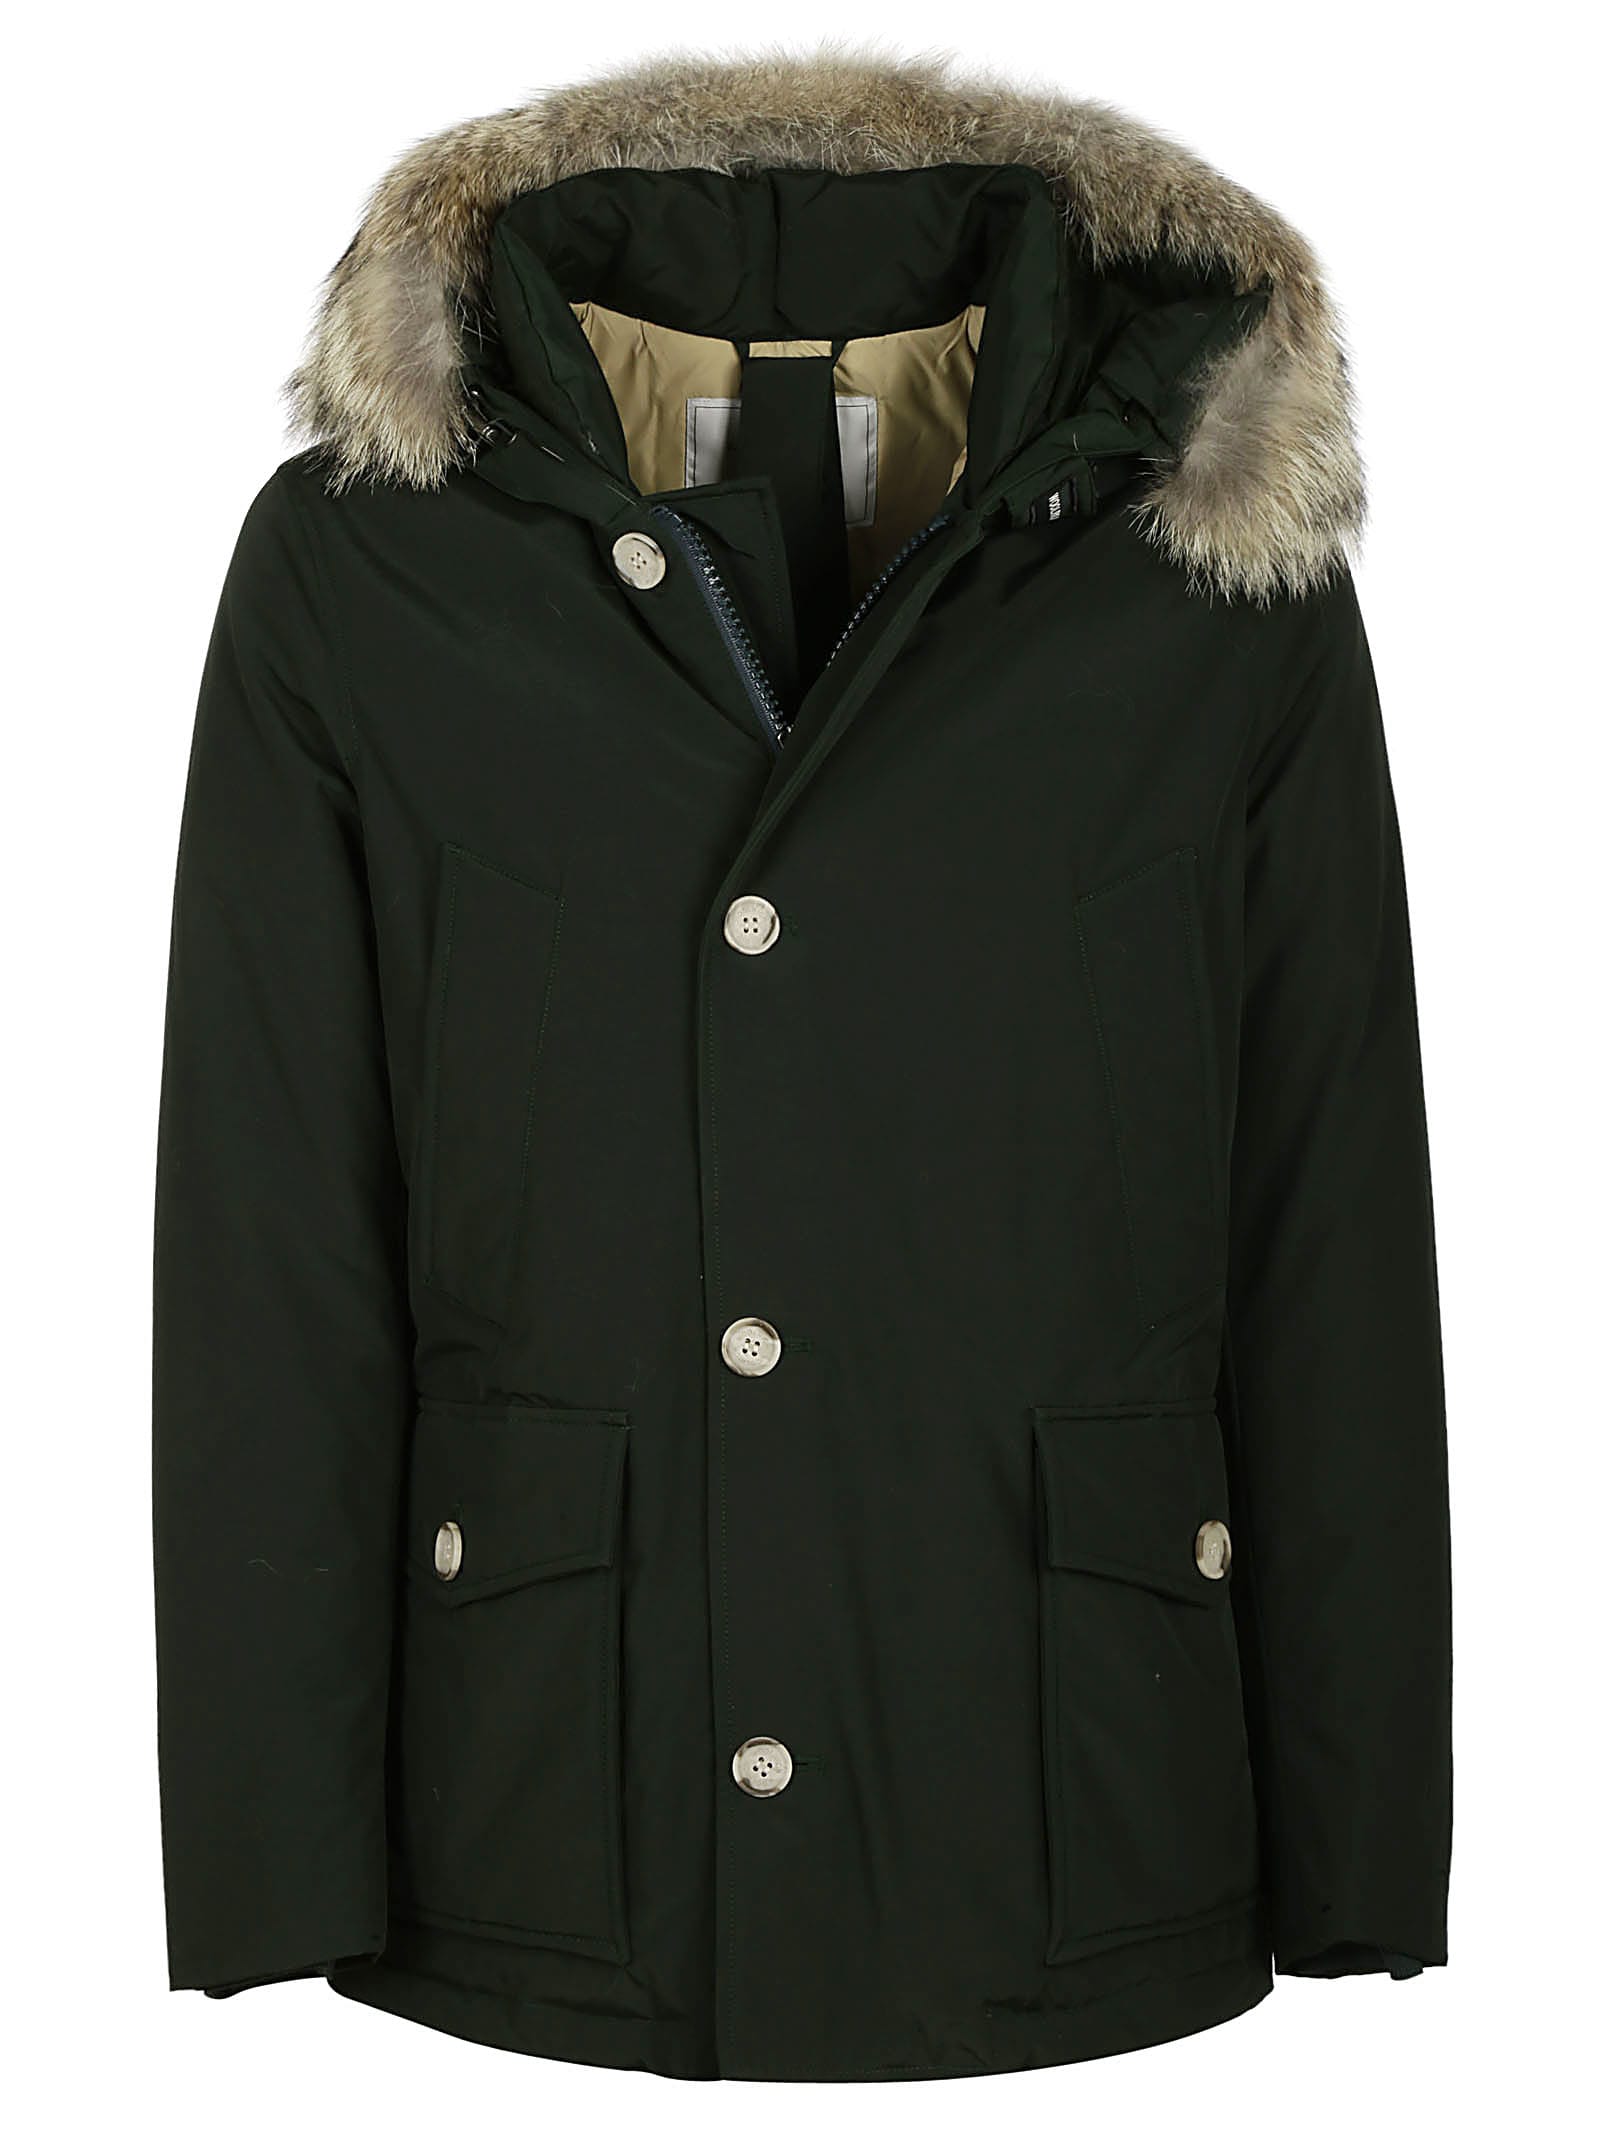 black parka jacket with fur hood